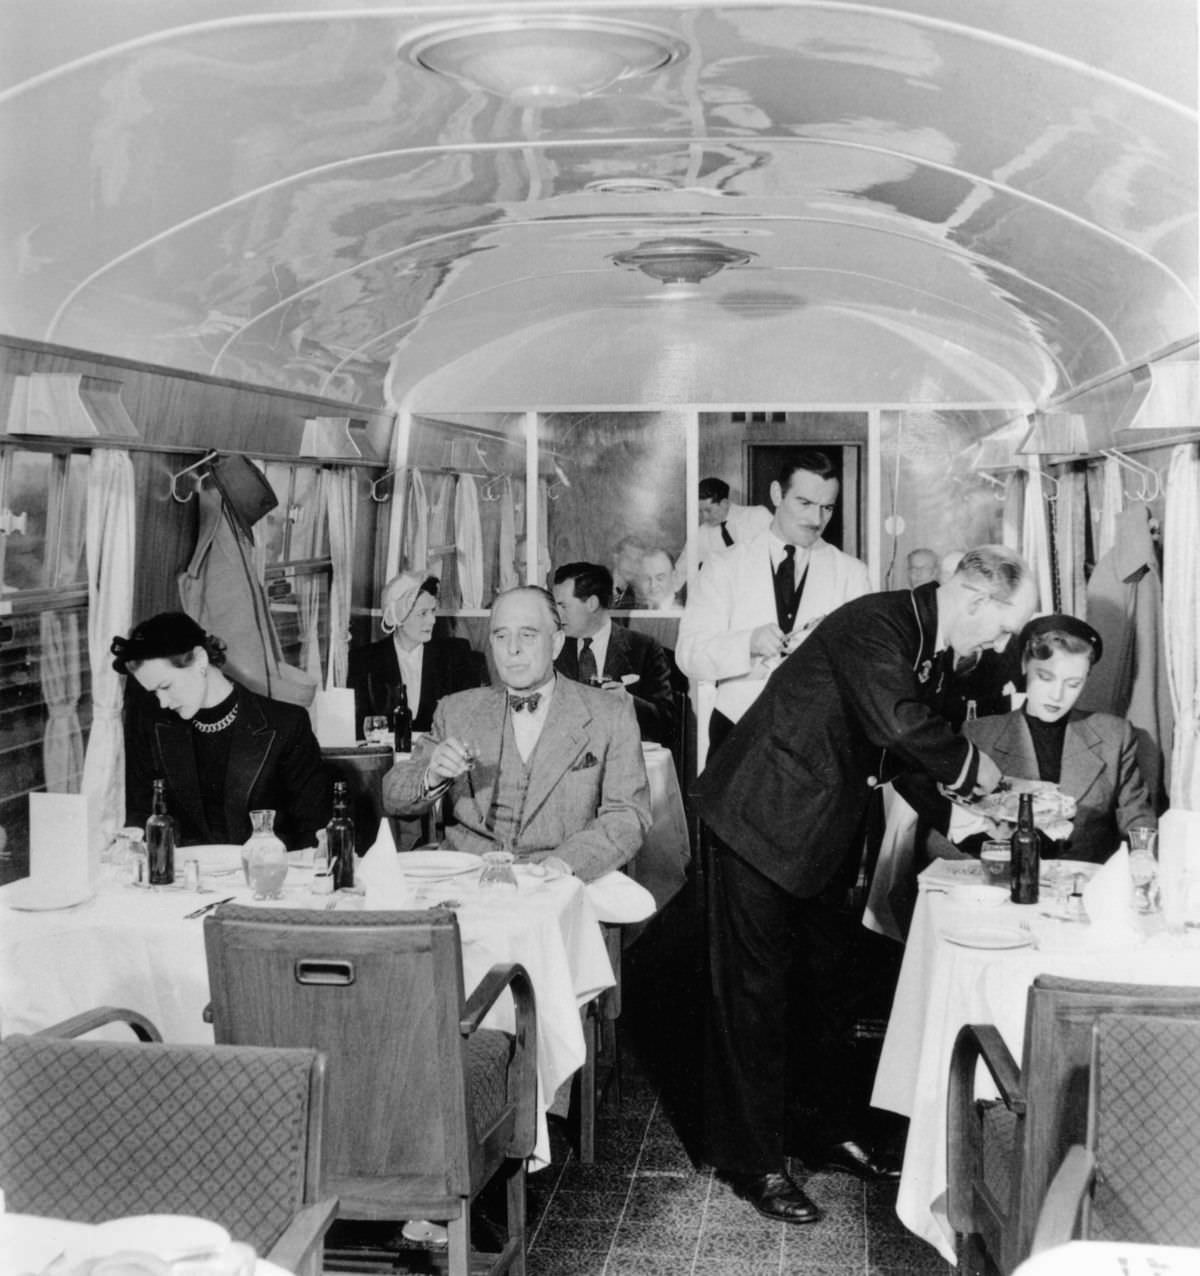 British Rail stewards serve drinks in a first-class dining car, 1951.